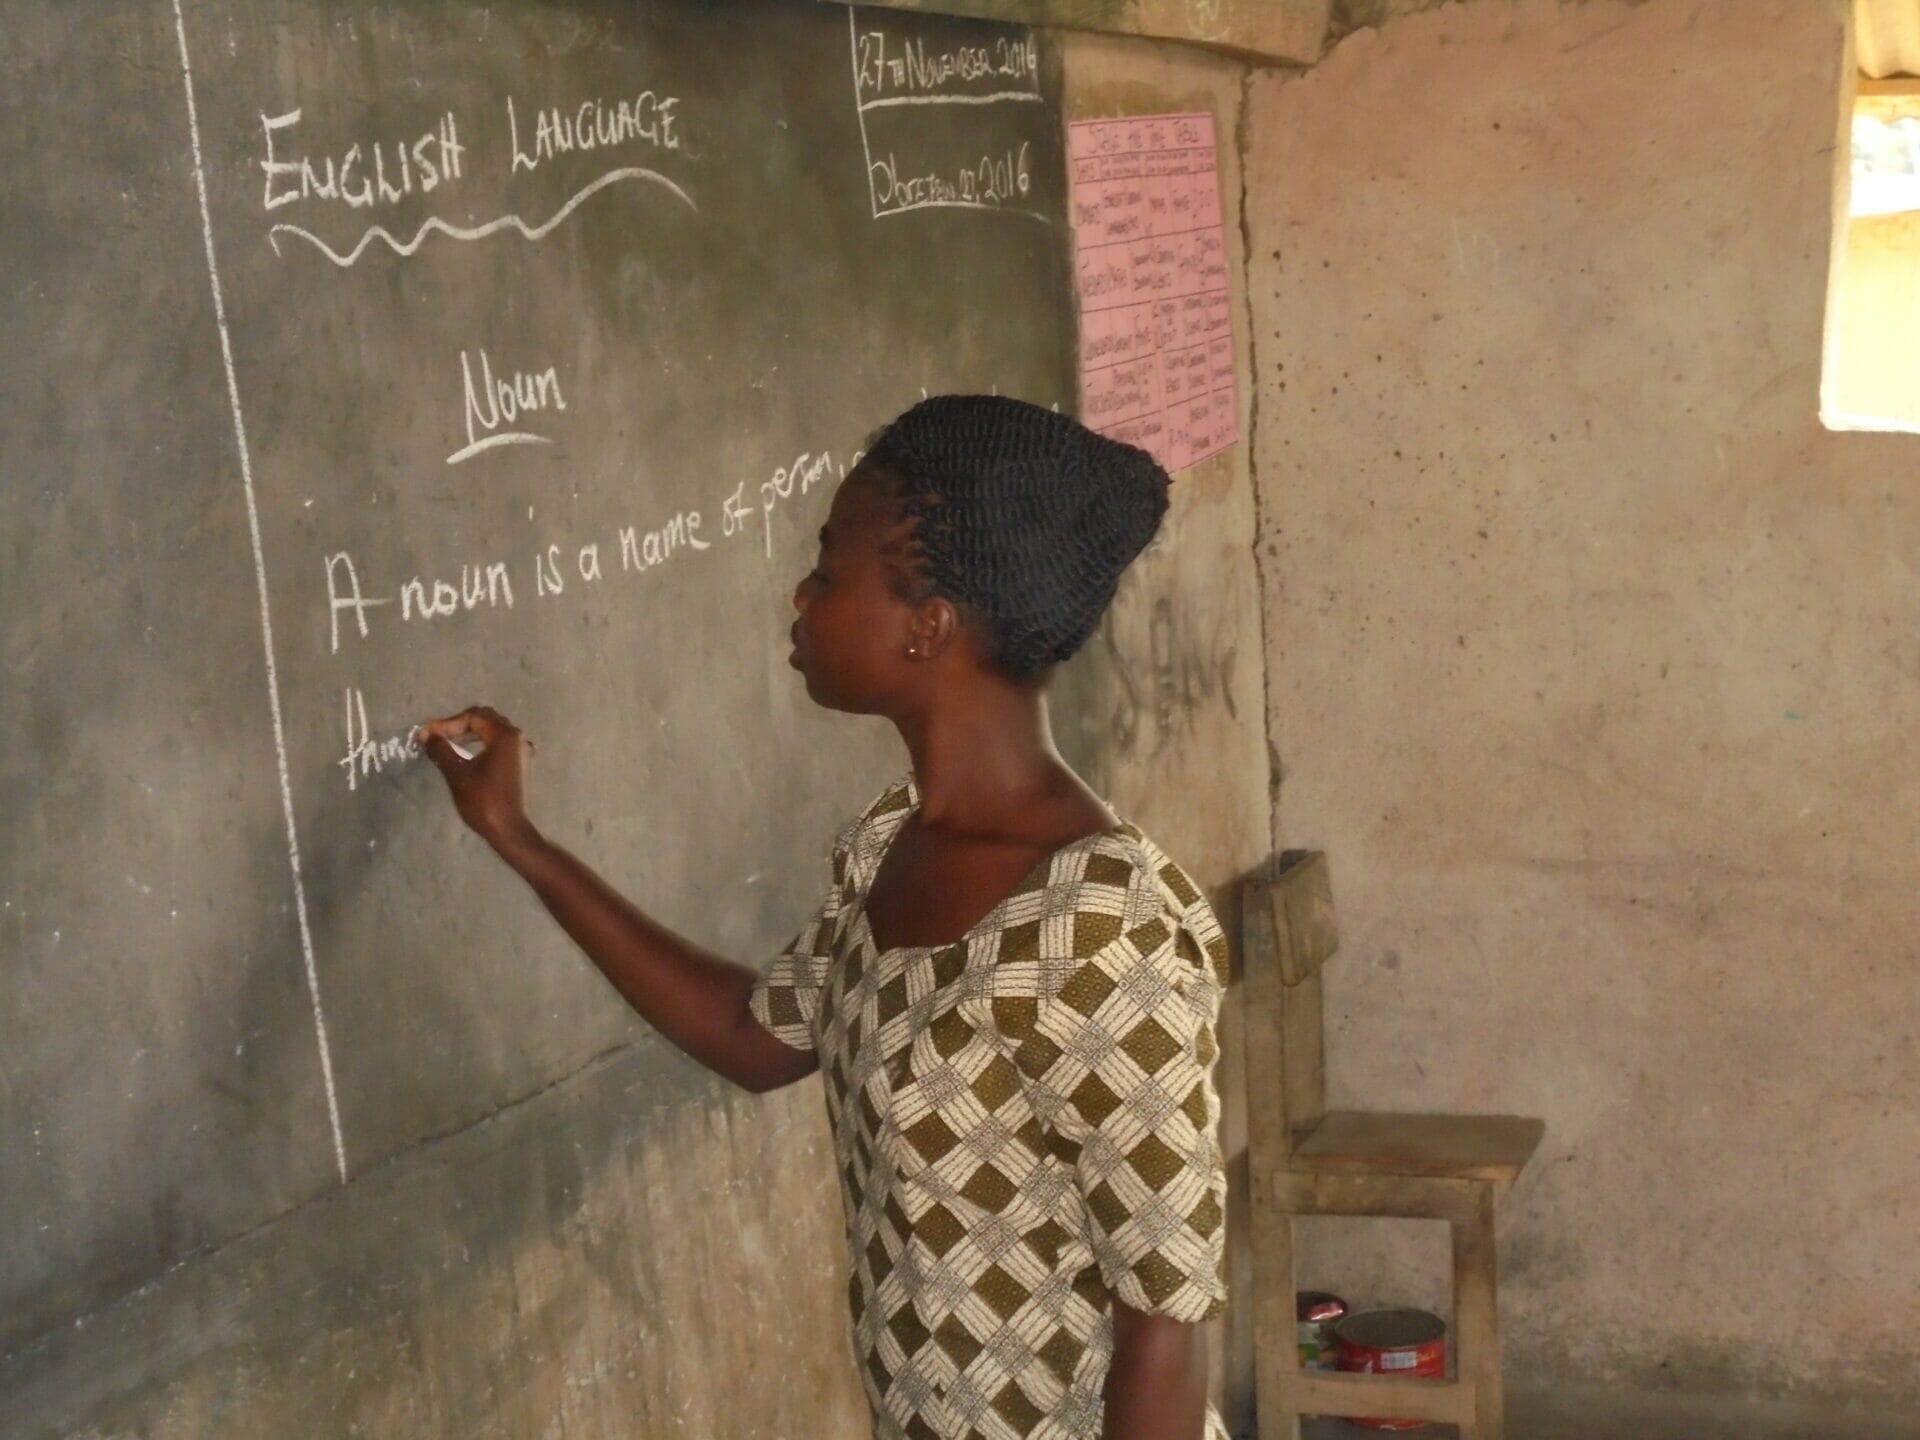 Former primary school teacher writes on the blackboard.